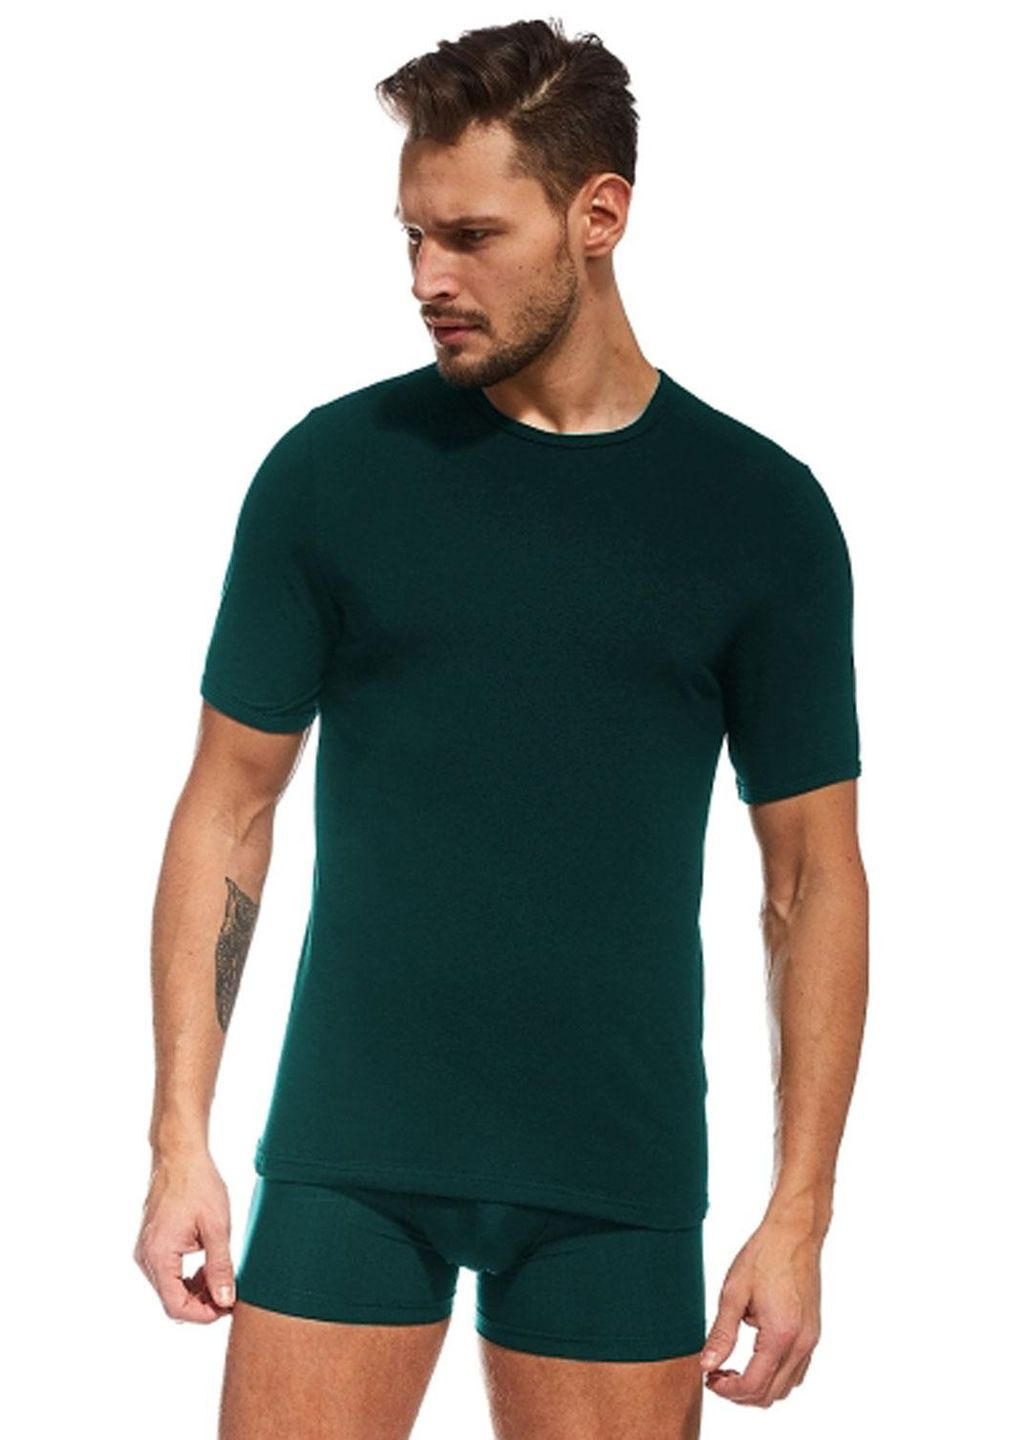 Зеленая футболка мужская new high emotion 532 с коротким рукавом Cornette